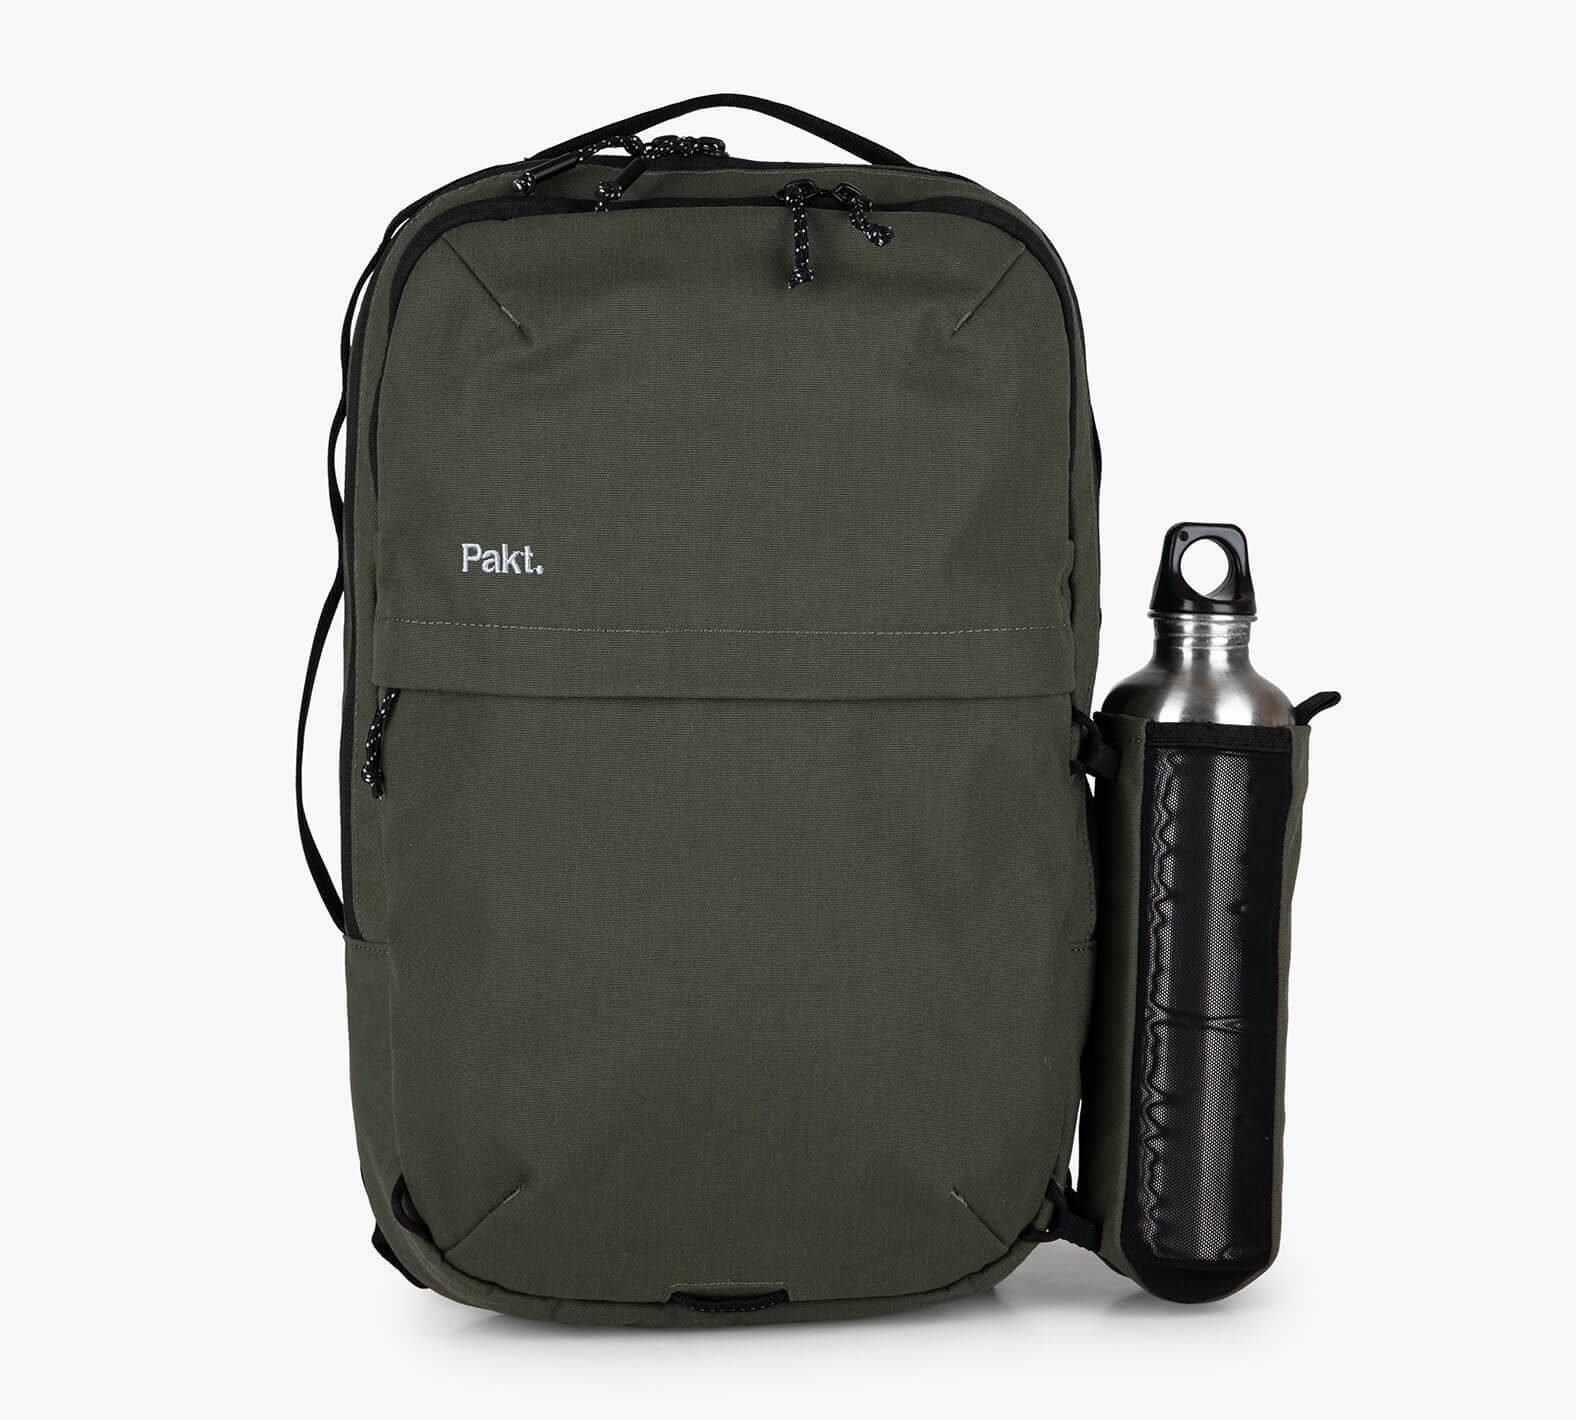 Green sling backpack with water bottle holder